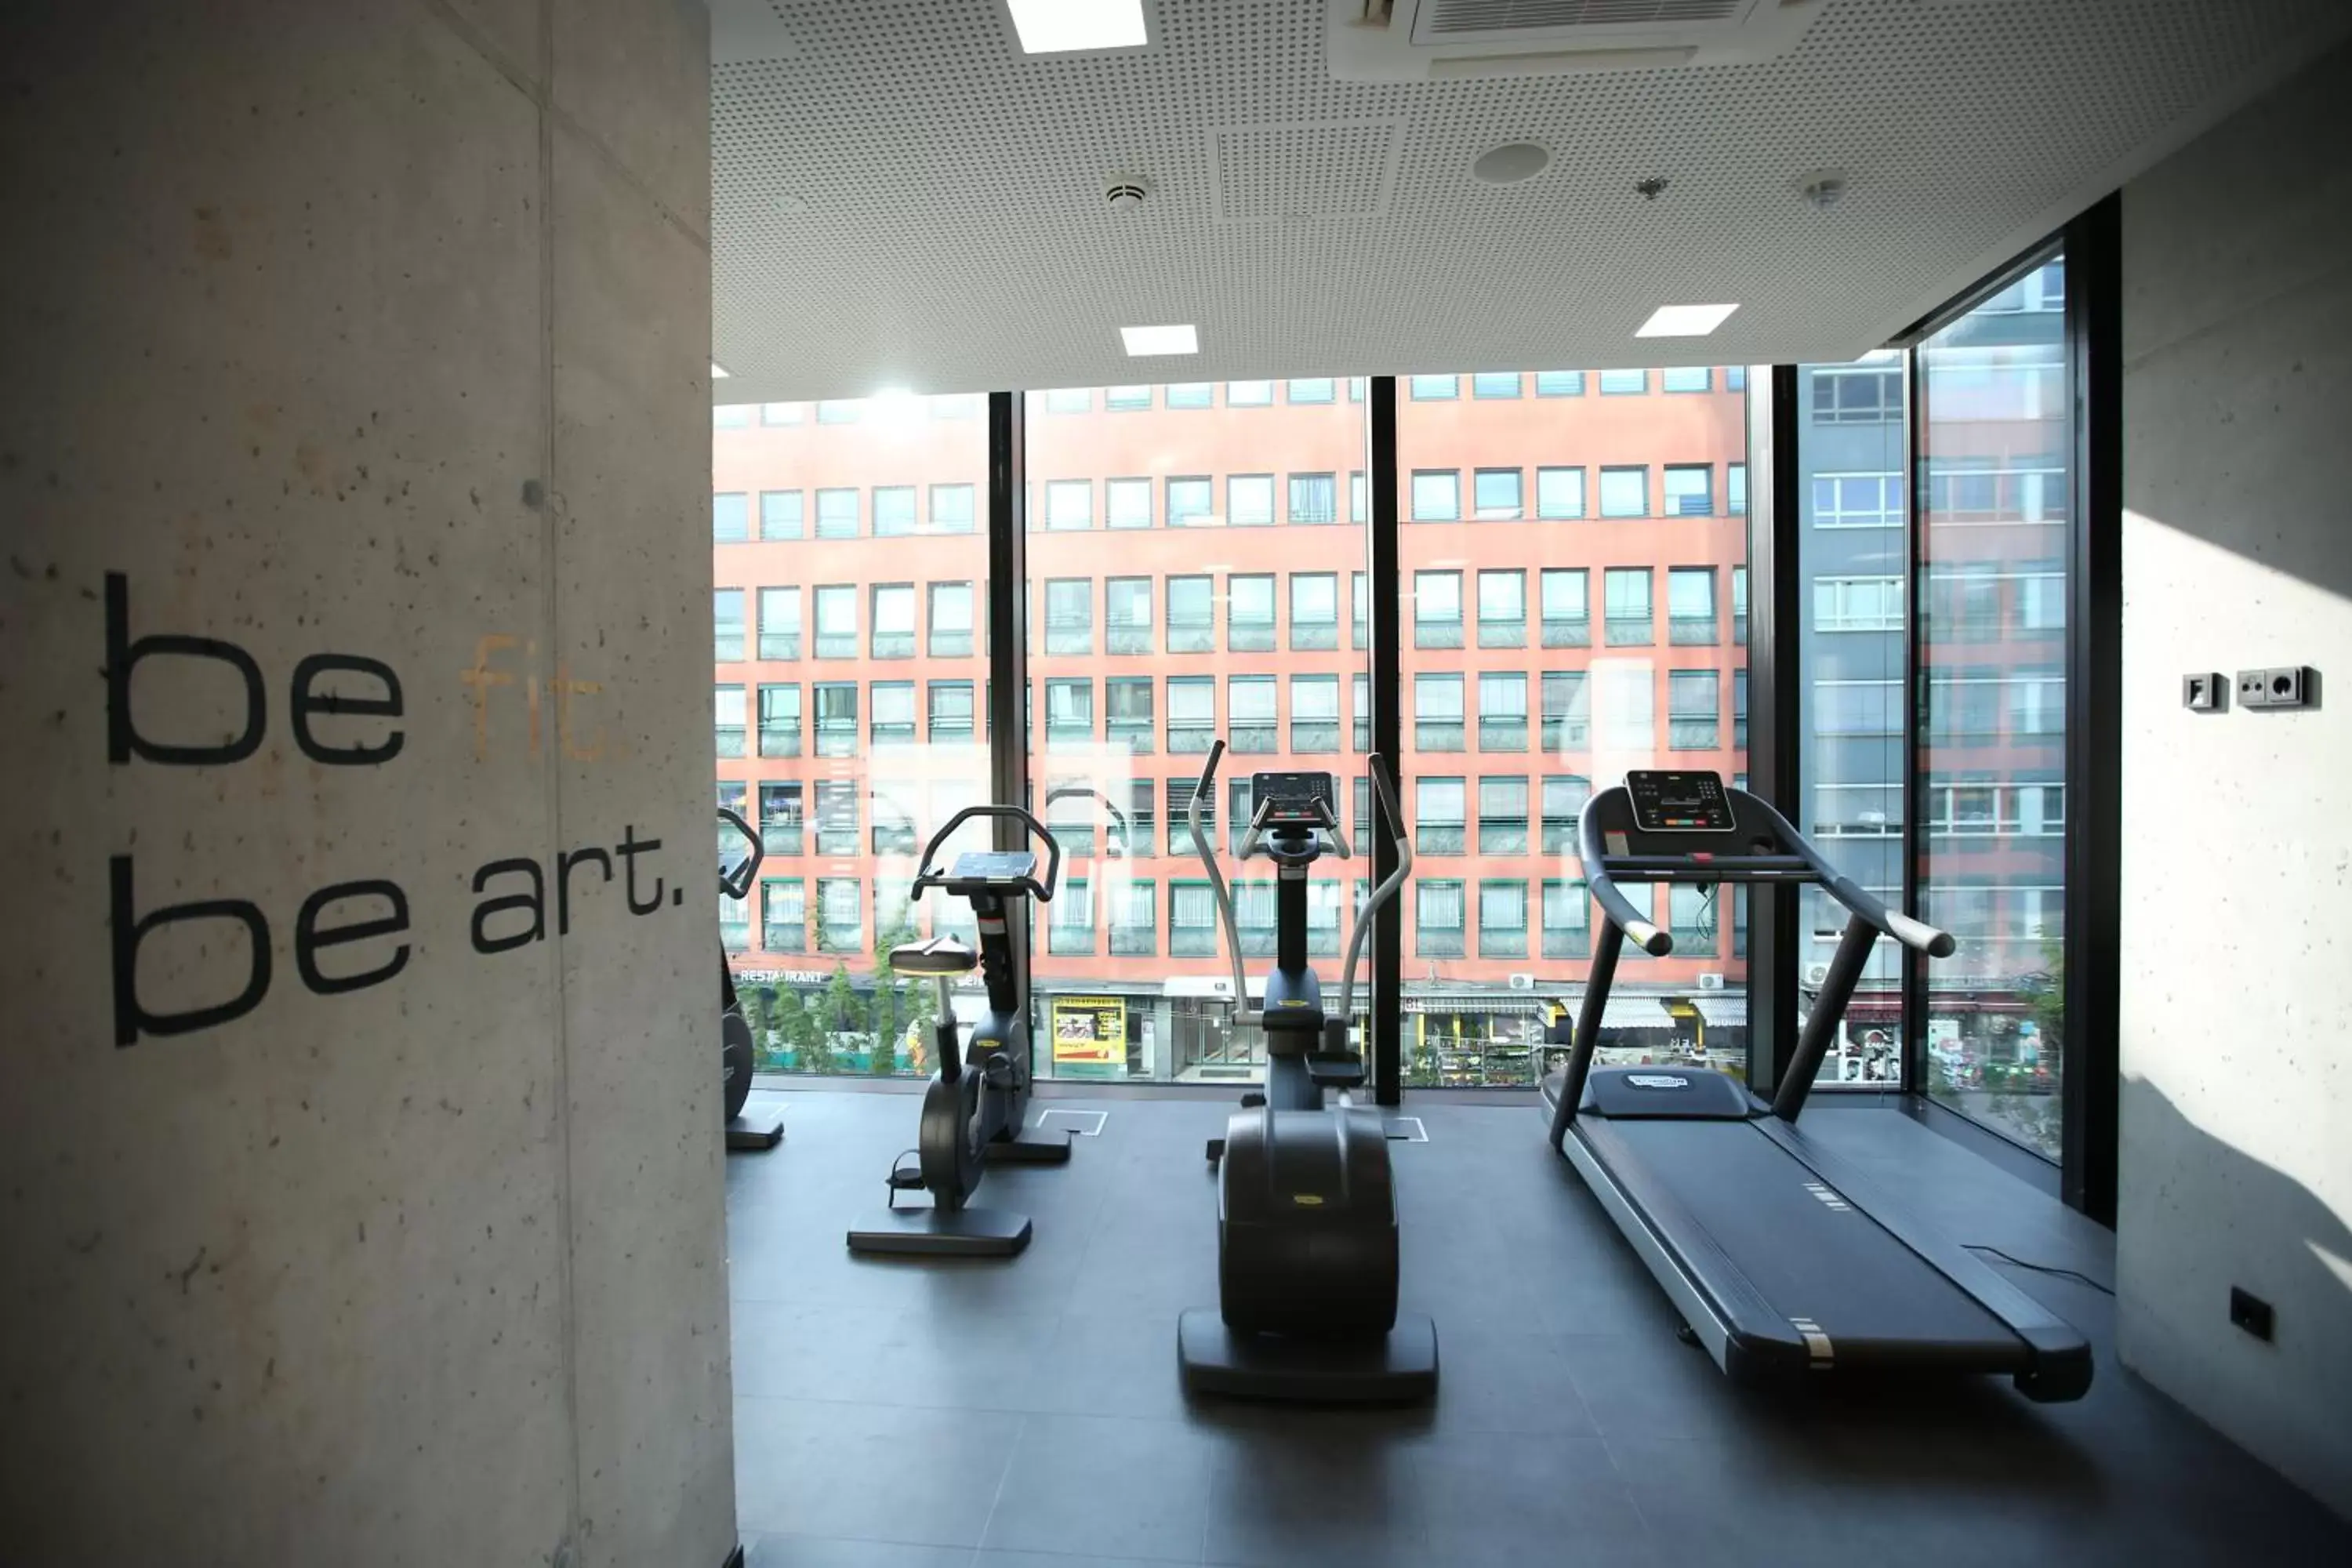 Fitness centre/facilities, Fitness Center/Facilities in arte Hotel Salzburg